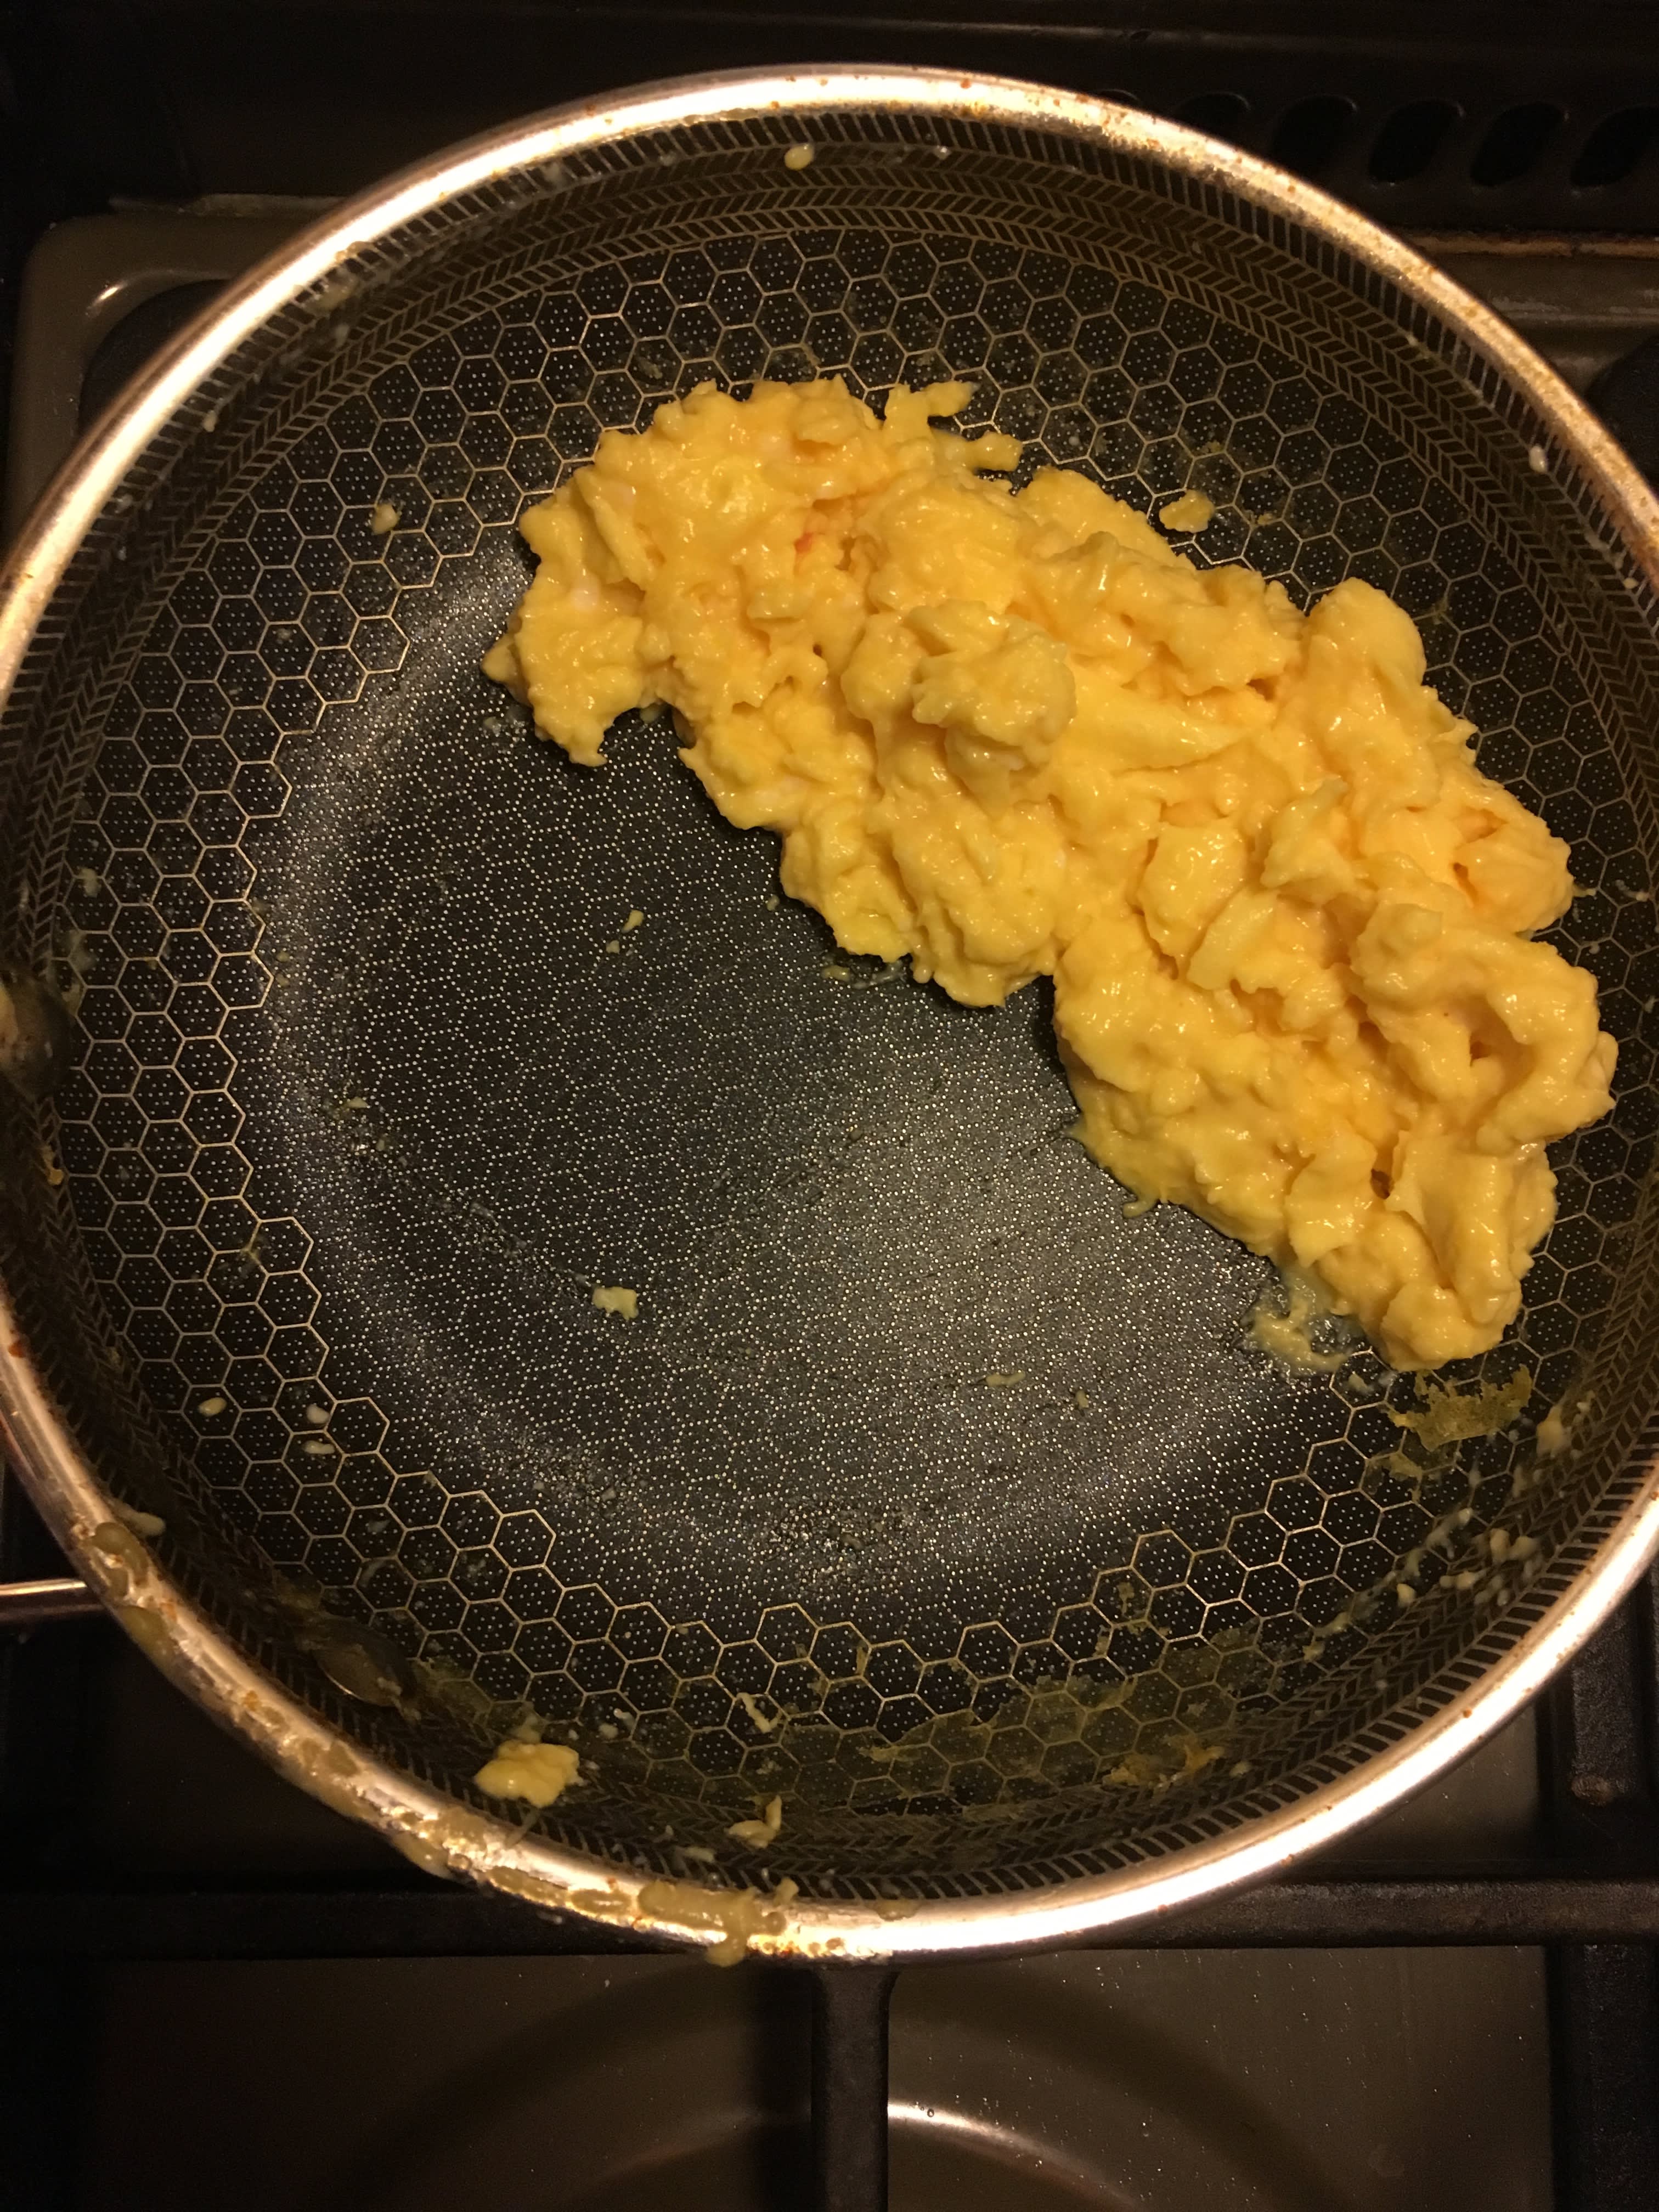 https://cdn.apartmenttherapy.info/image/upload/v1576510352/k/Edit/2020-01-Nonstick-Hybrid-Pans/scrambled-eggs-3-kelly-vaughan.jpg